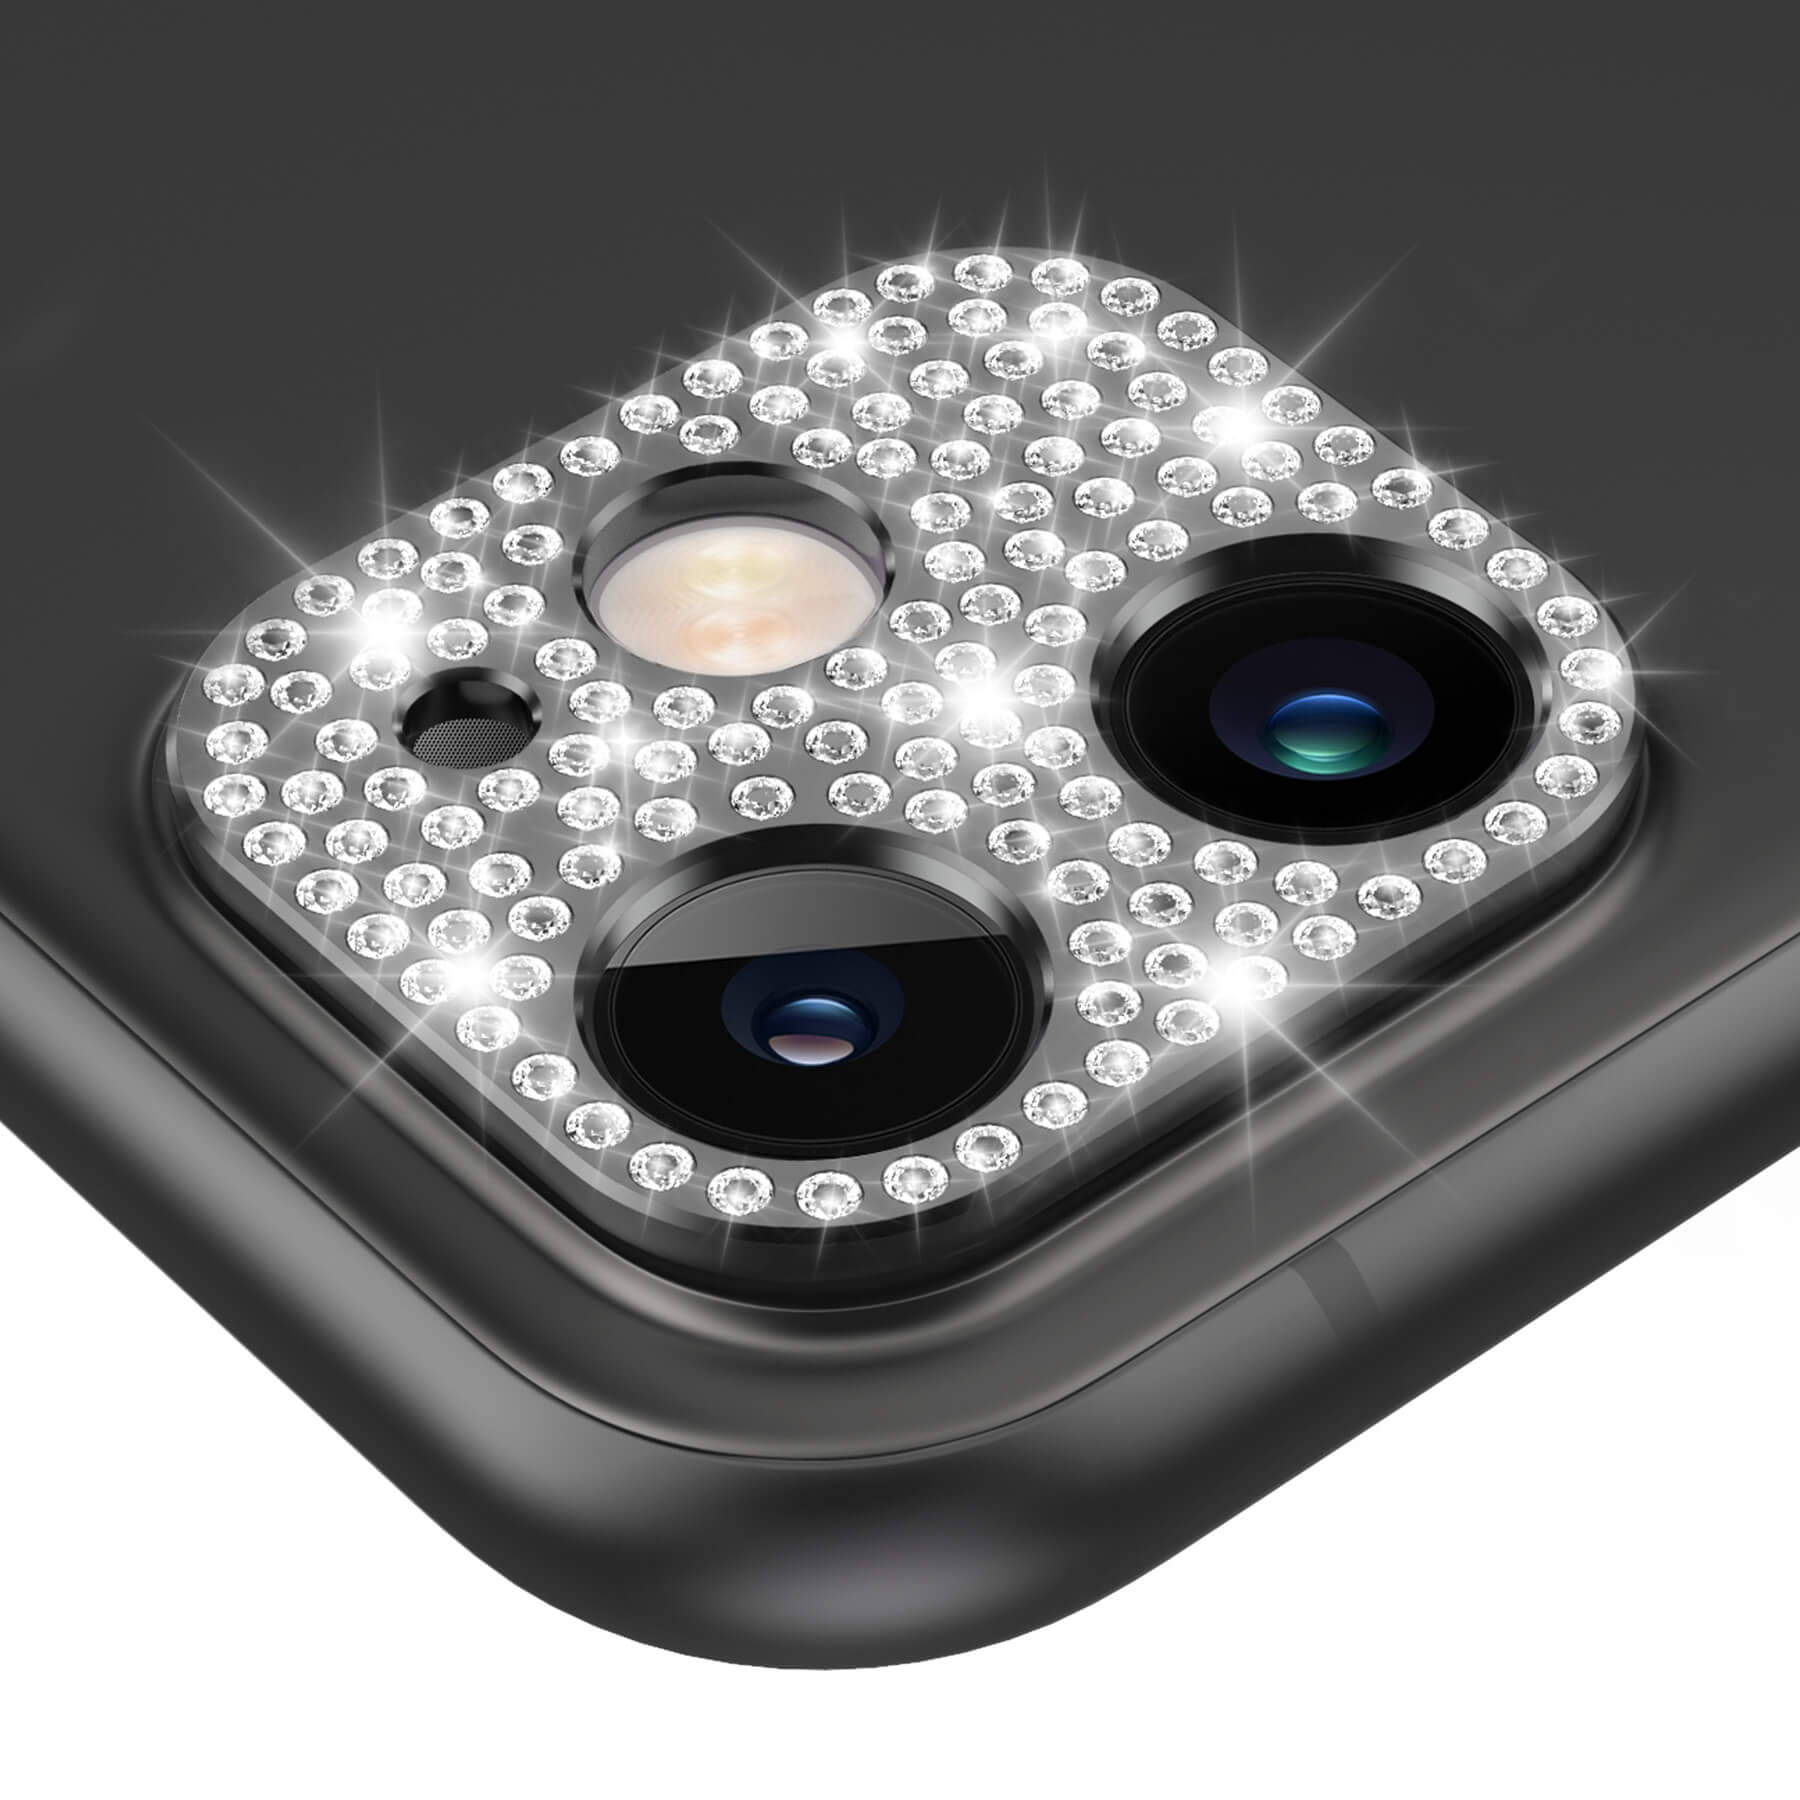 bling diamond iPhone 11 camera lens protector - black